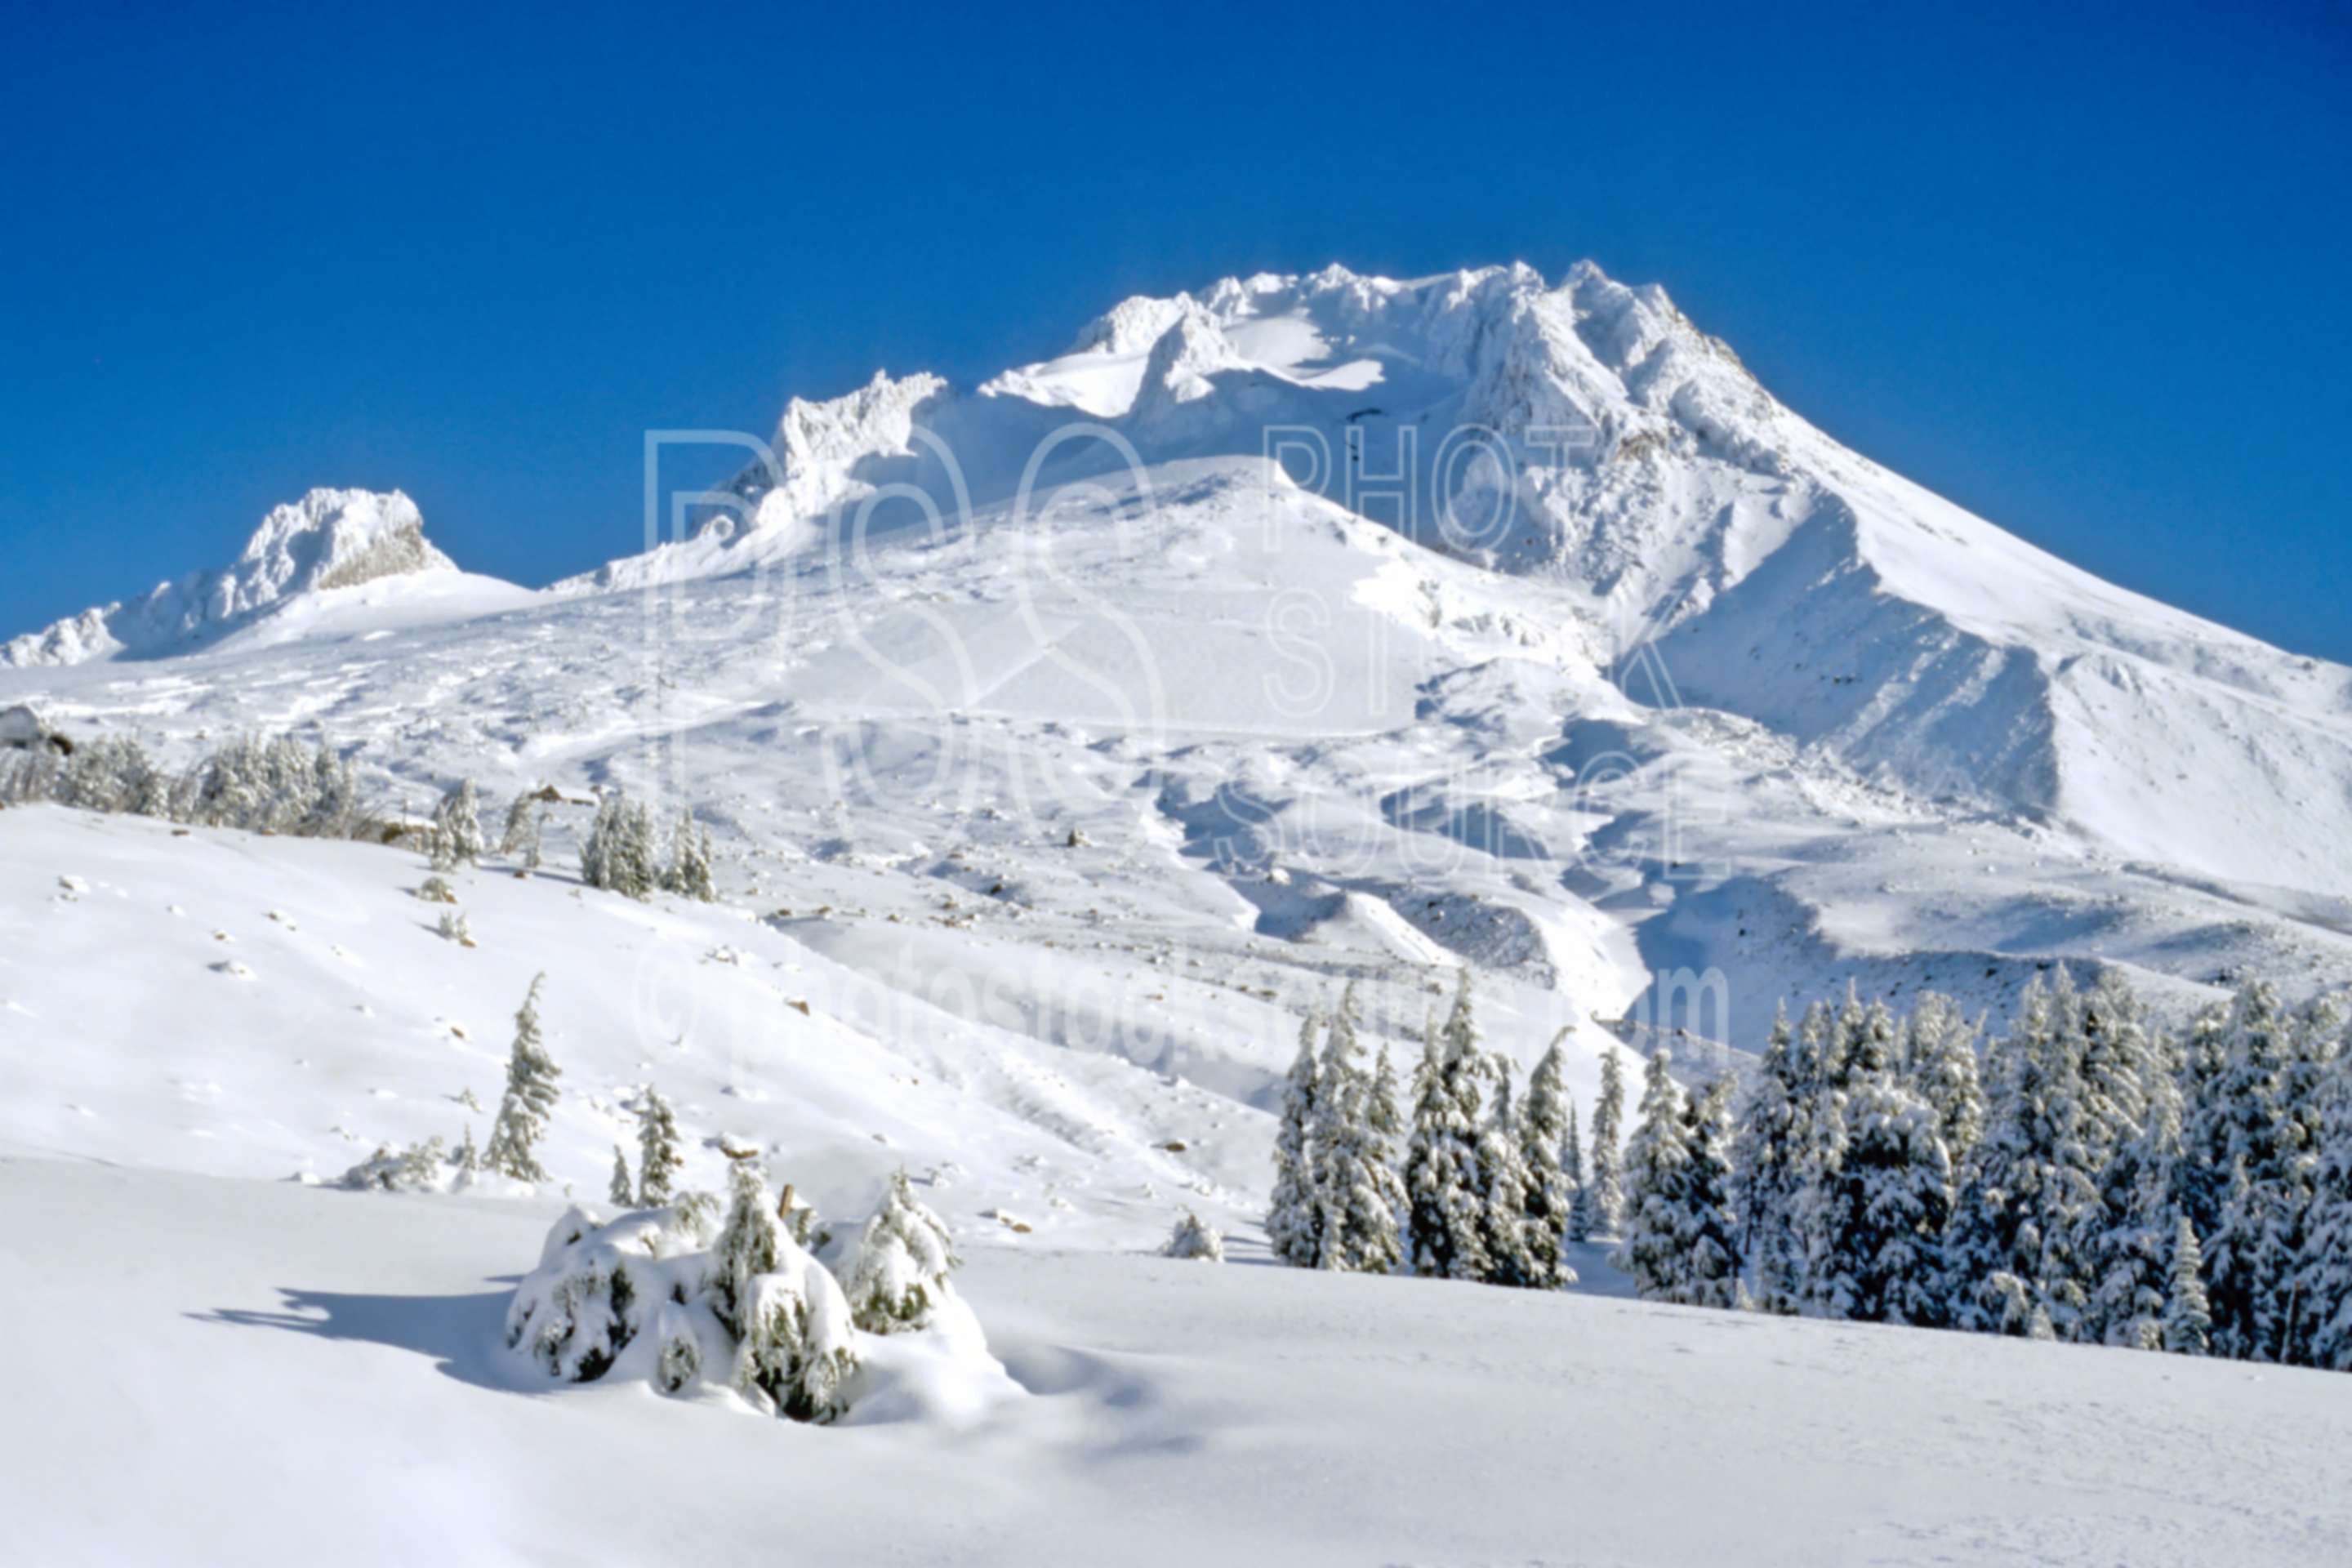 Mt. Hood Snow,morning,snow,timberline lodge,mt. hood,mount,winter,mountains